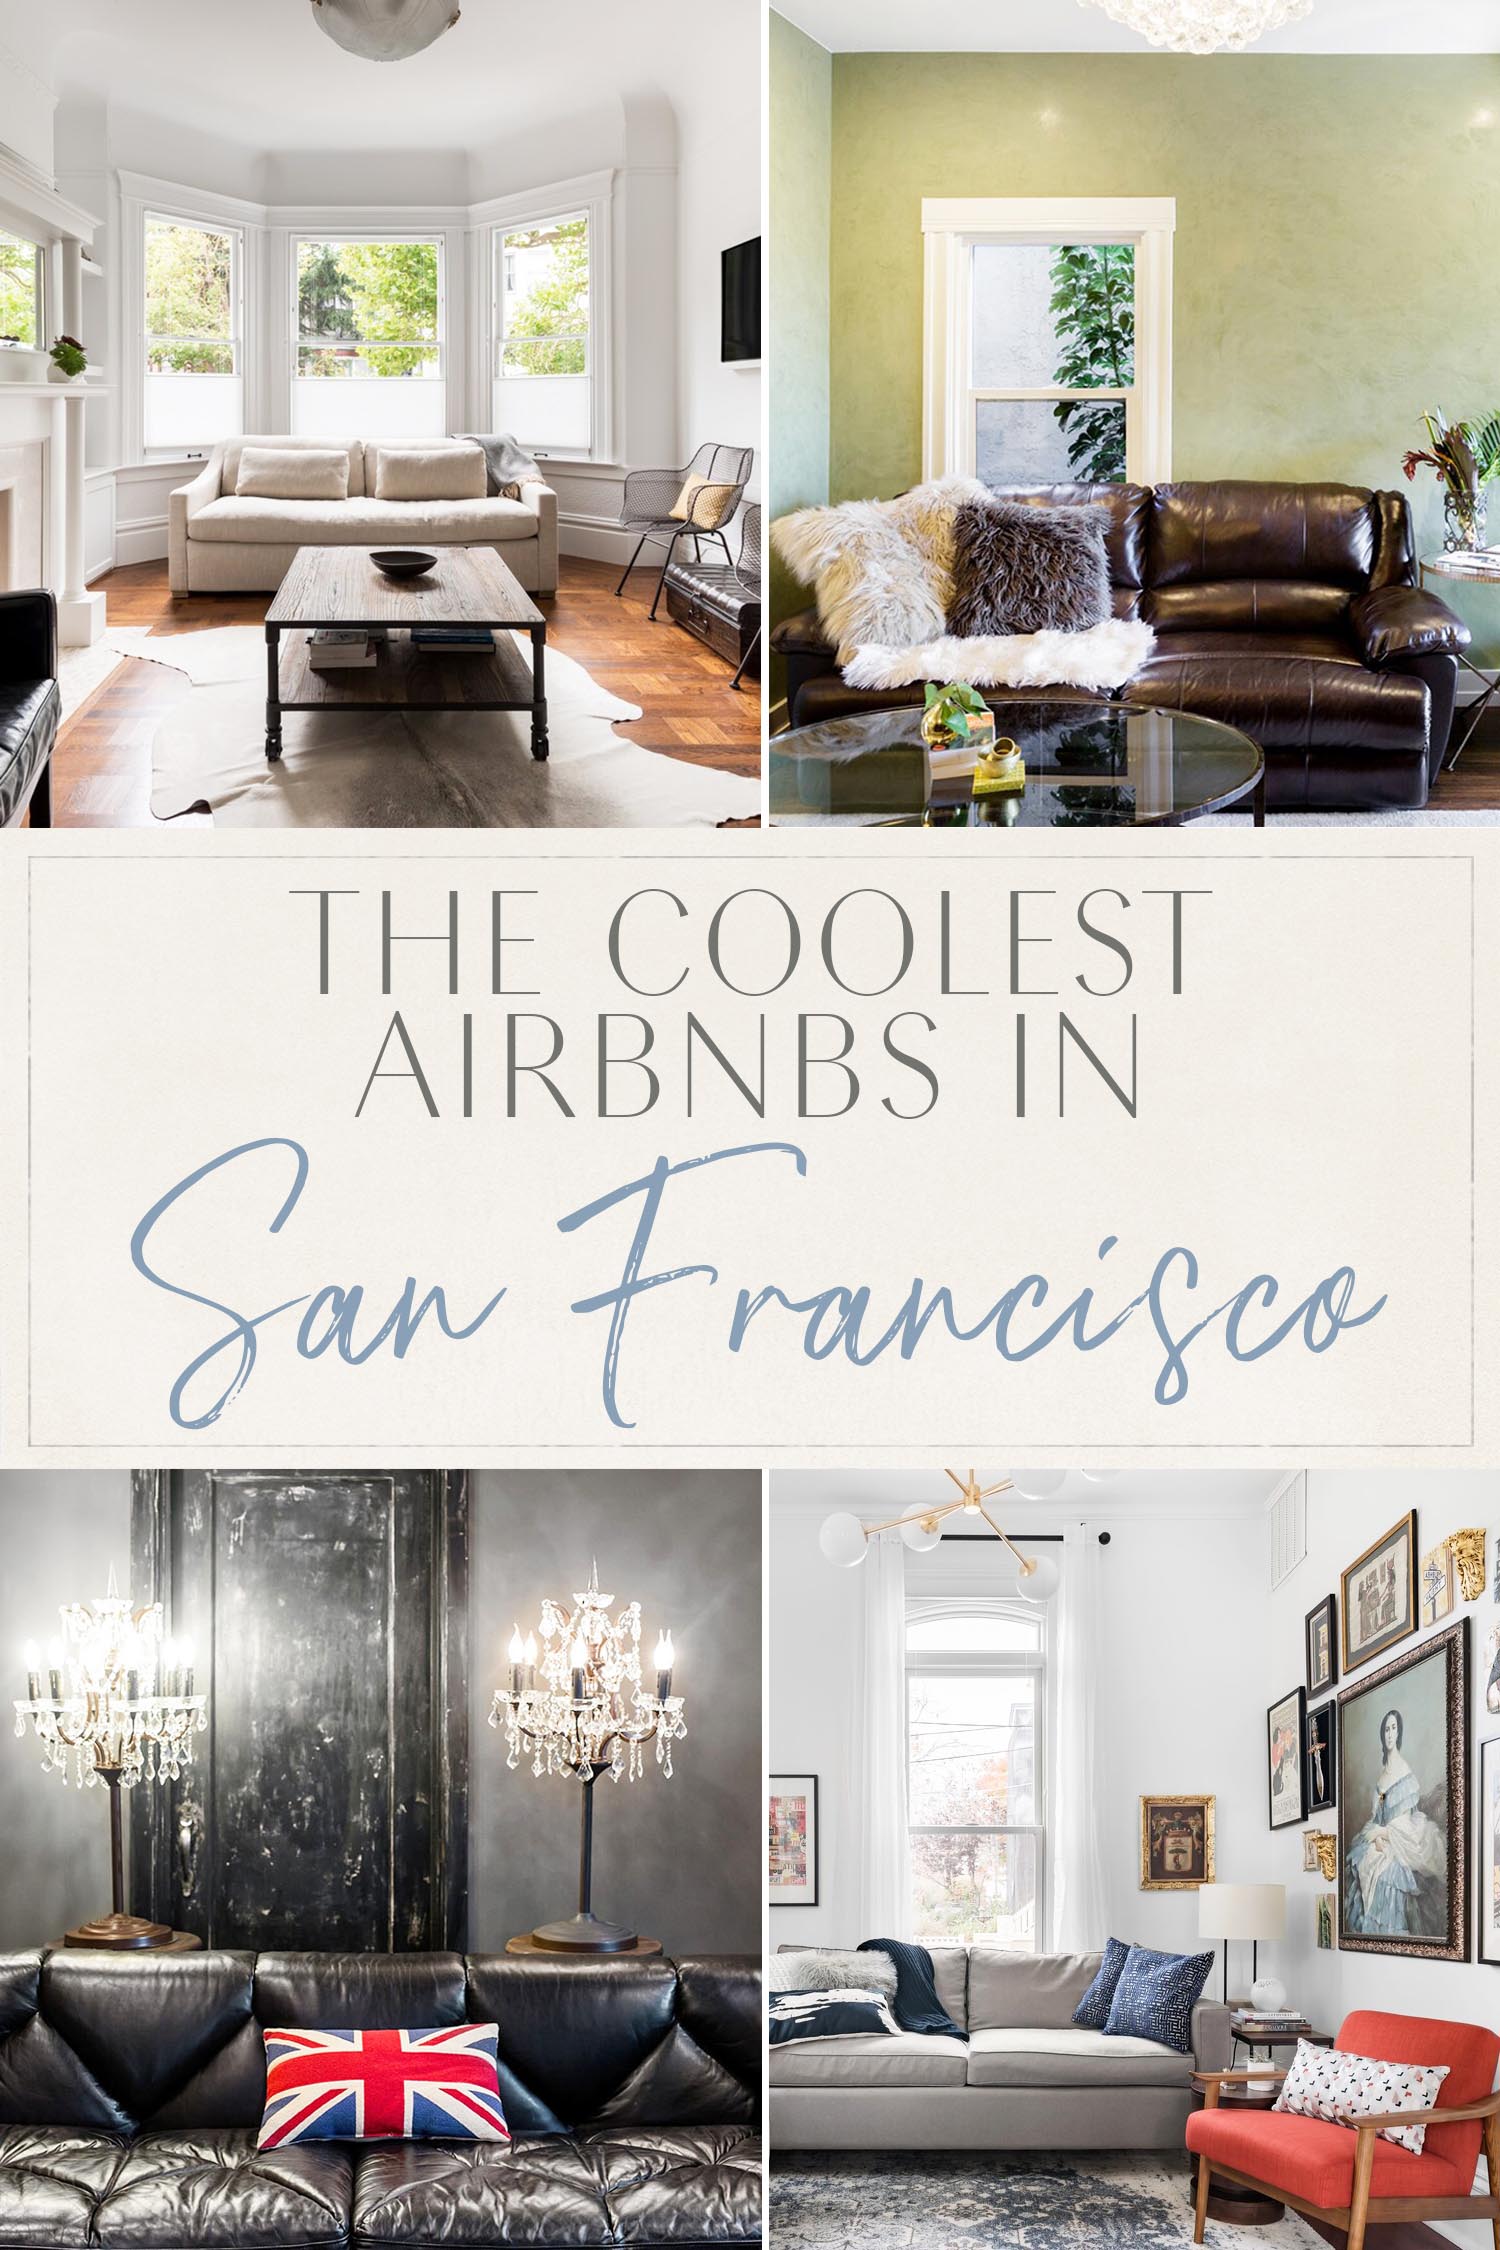 Coolest Airbnbs São Francisco